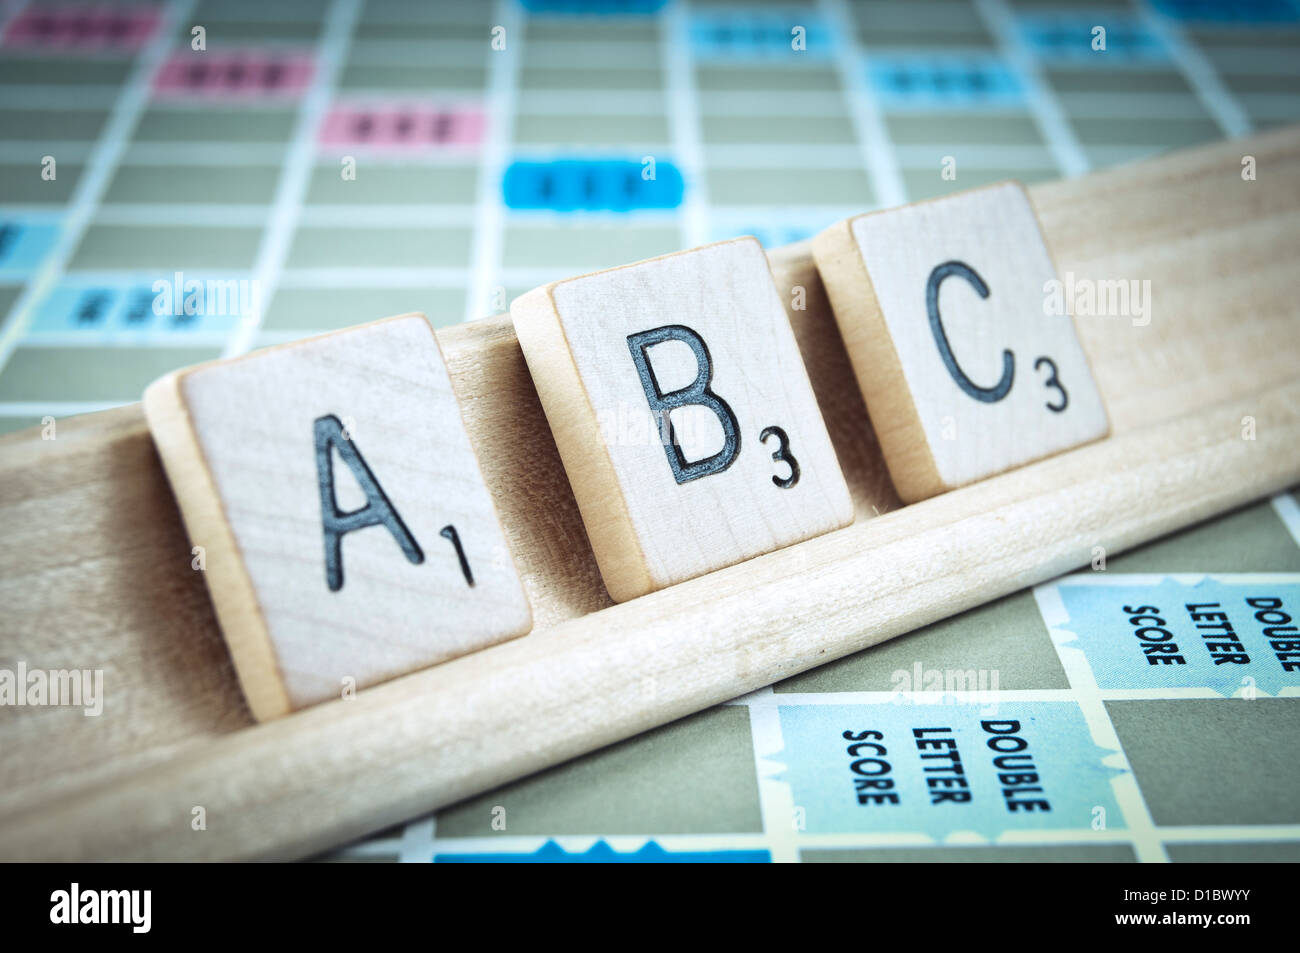 ABC-Wort buchstabiert mit Scrabble Fliesen Stockfoto